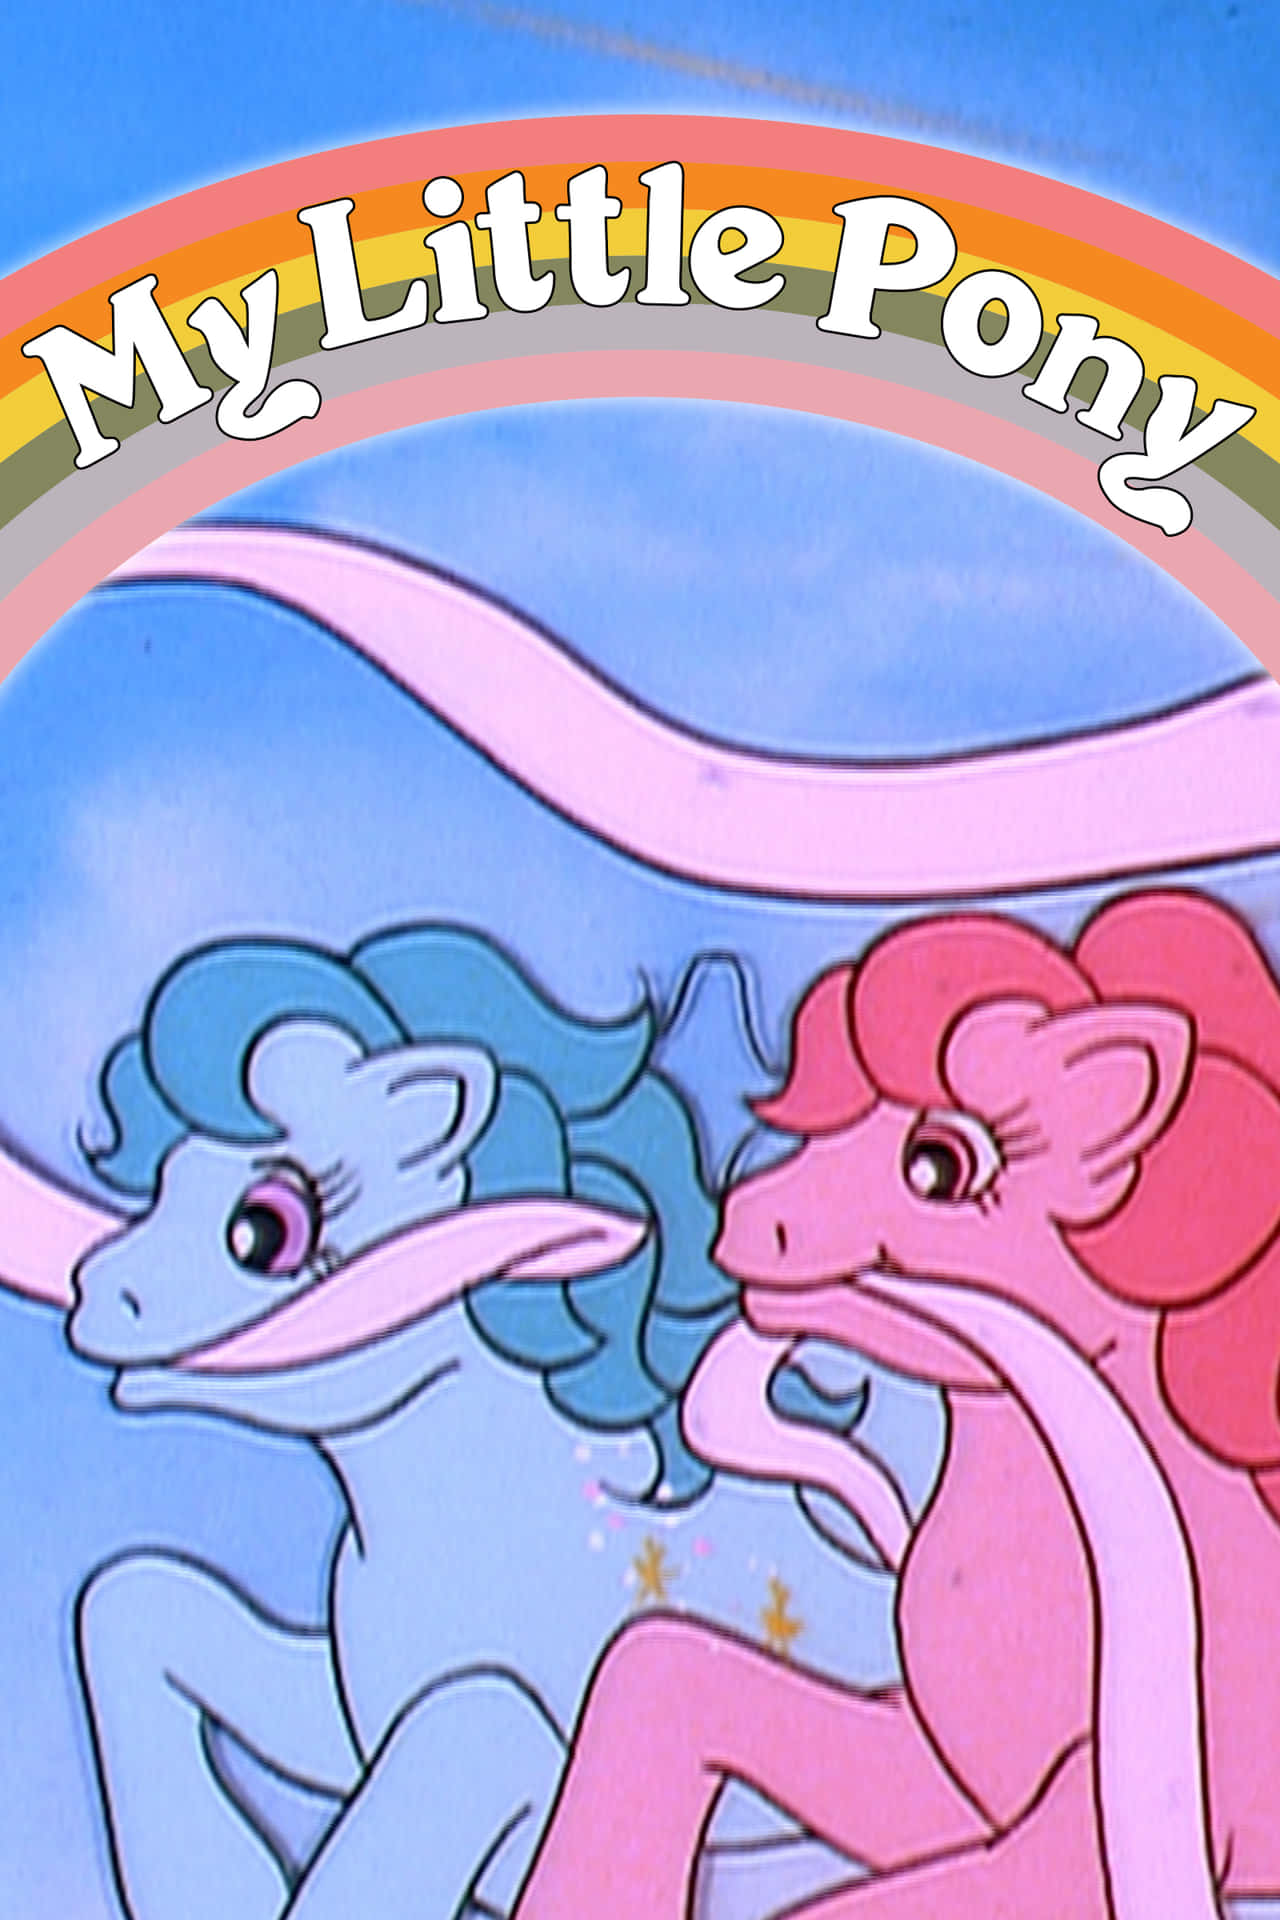 Imagende My Little Pony Con Rainbow Dash Y Pinkie